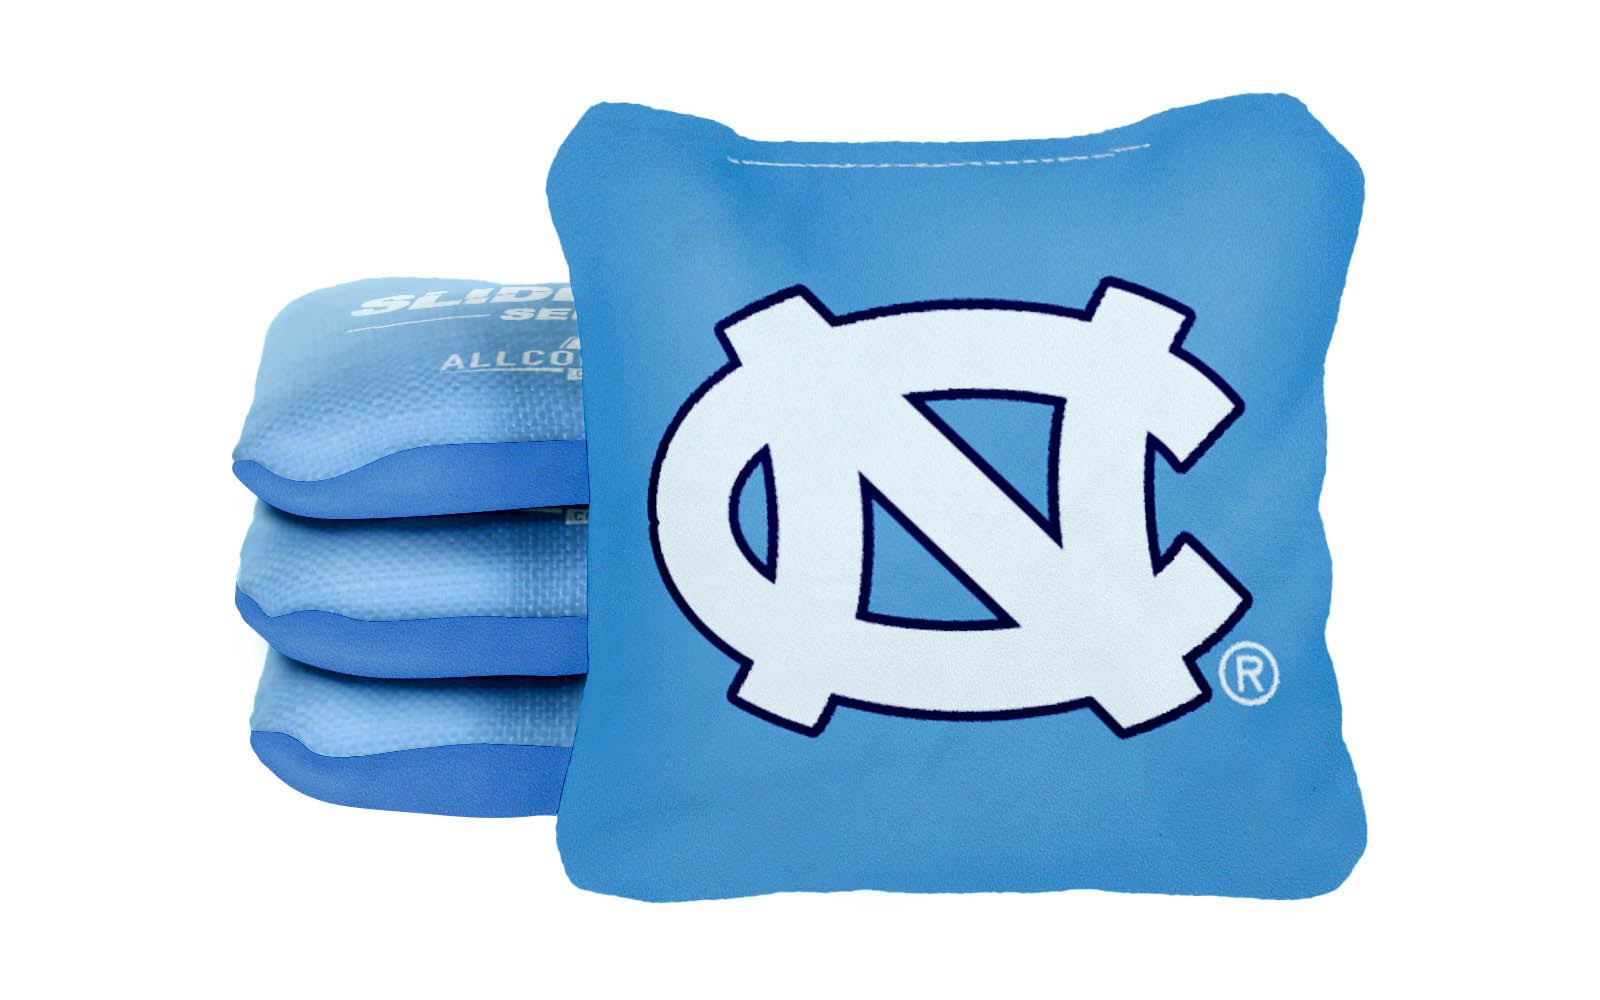 Officially Licensed Collegiate Cornhole Bags - Slide Rite - Set of 4 - University of North Carolina (UNC)